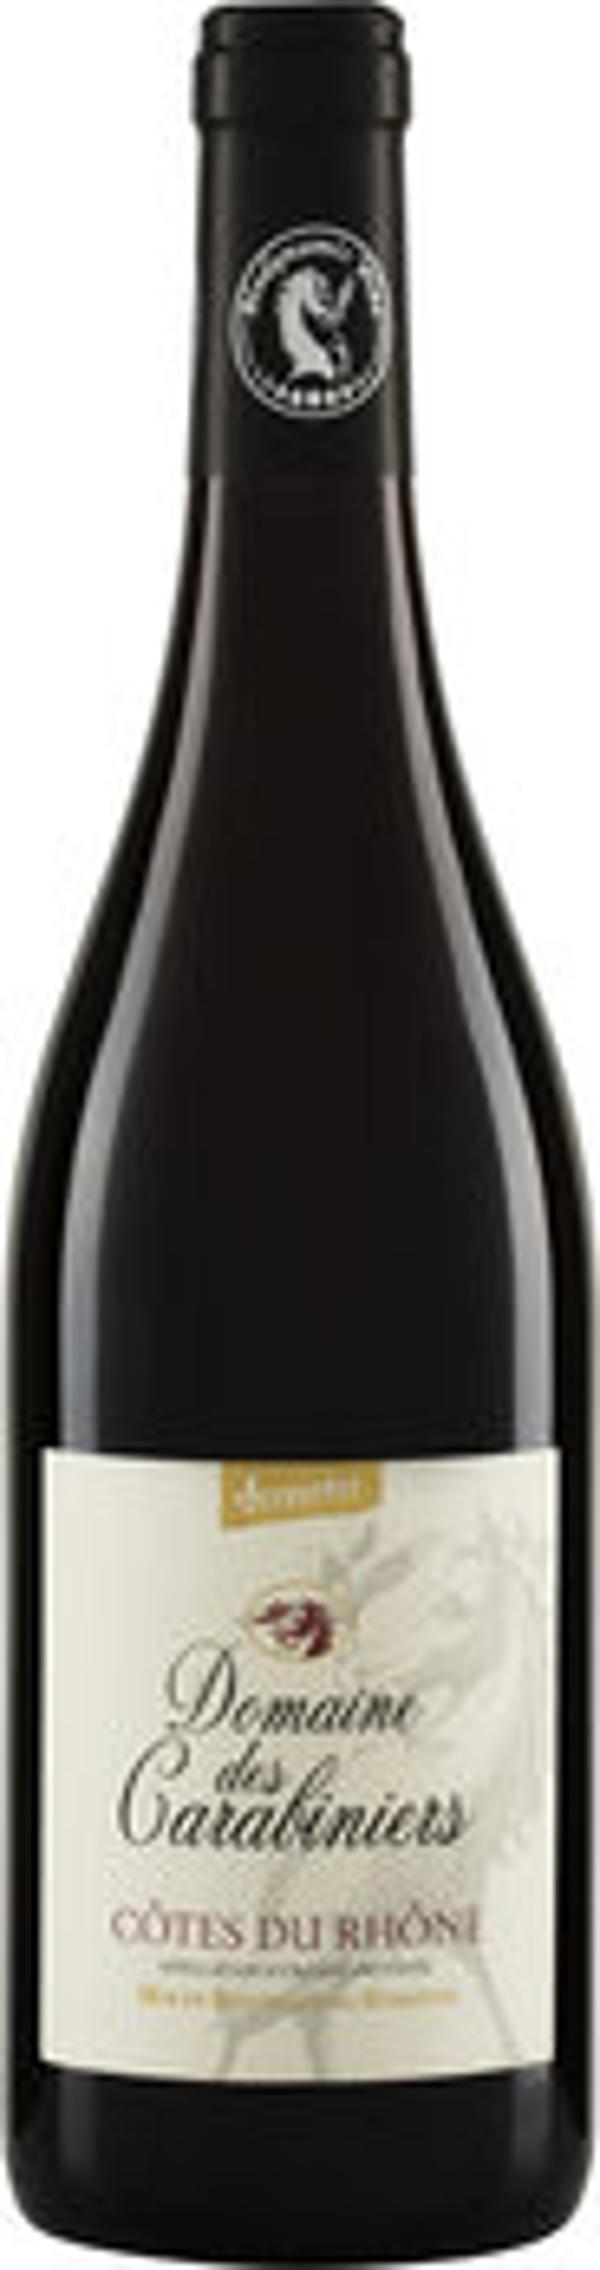 Produktfoto zu Côtes du Rhône Rouge AOP Carabiniers, Rotwein trocken 0,75l